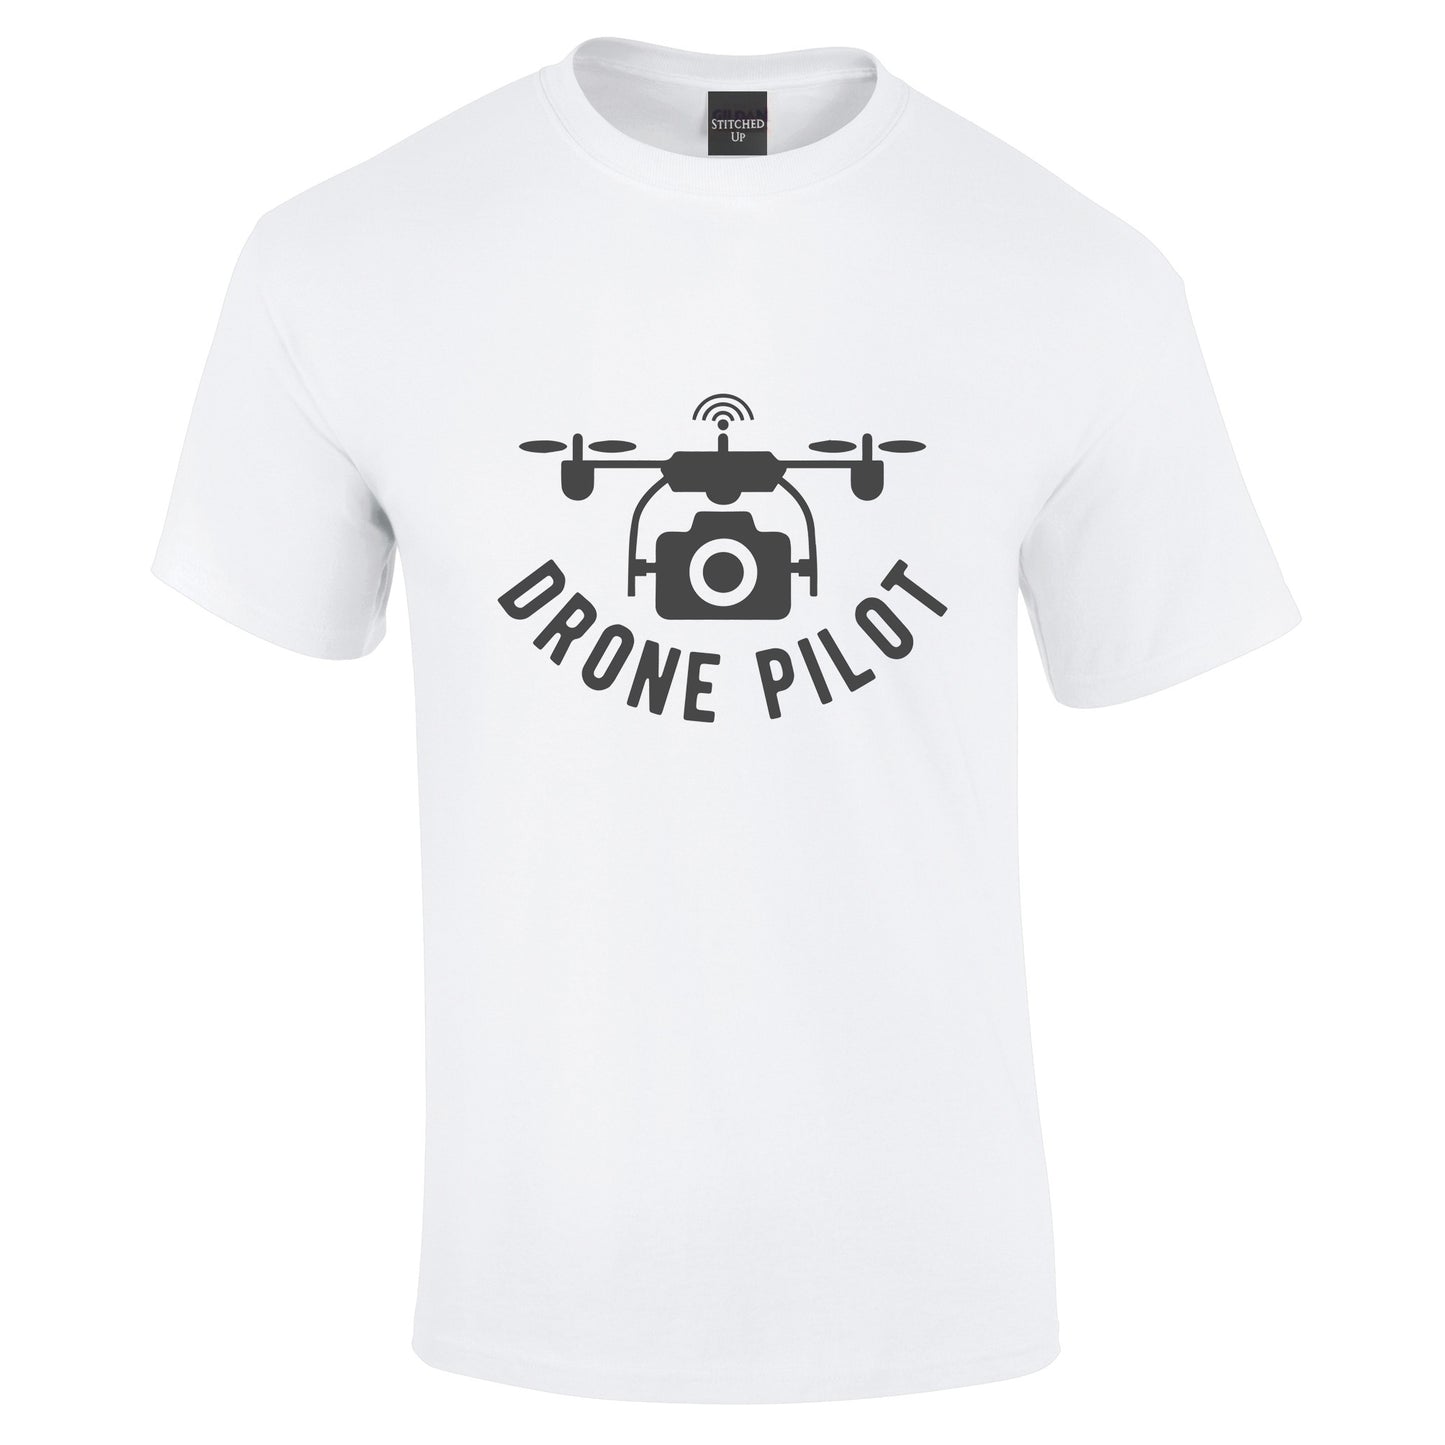 Drone Pilot T-Shirt